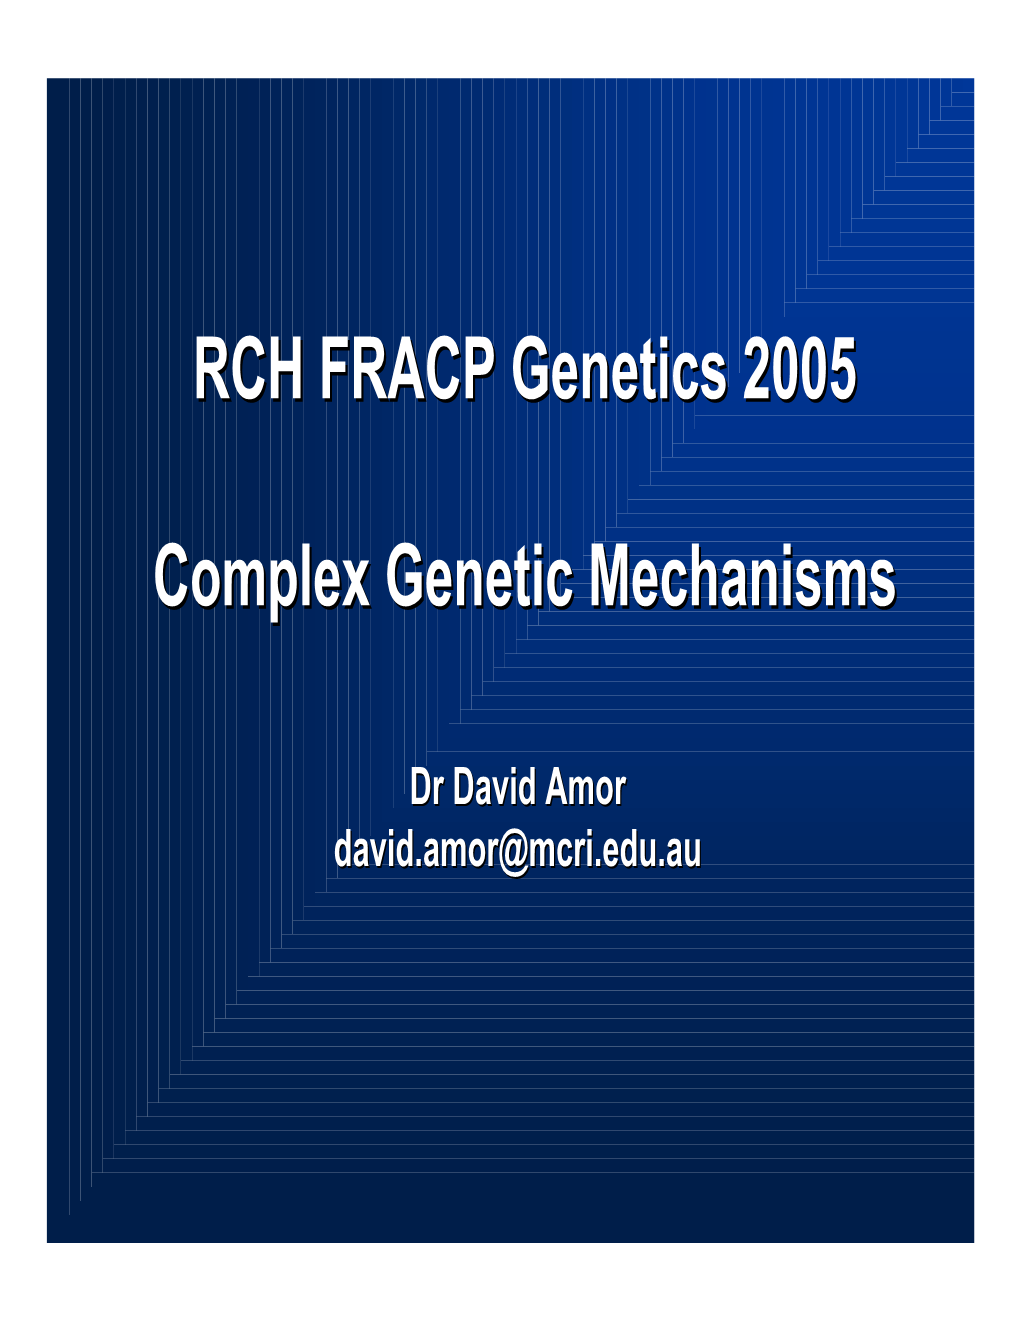 RCH FRACP Genetics 2005 Complex Genetic Mechanisms